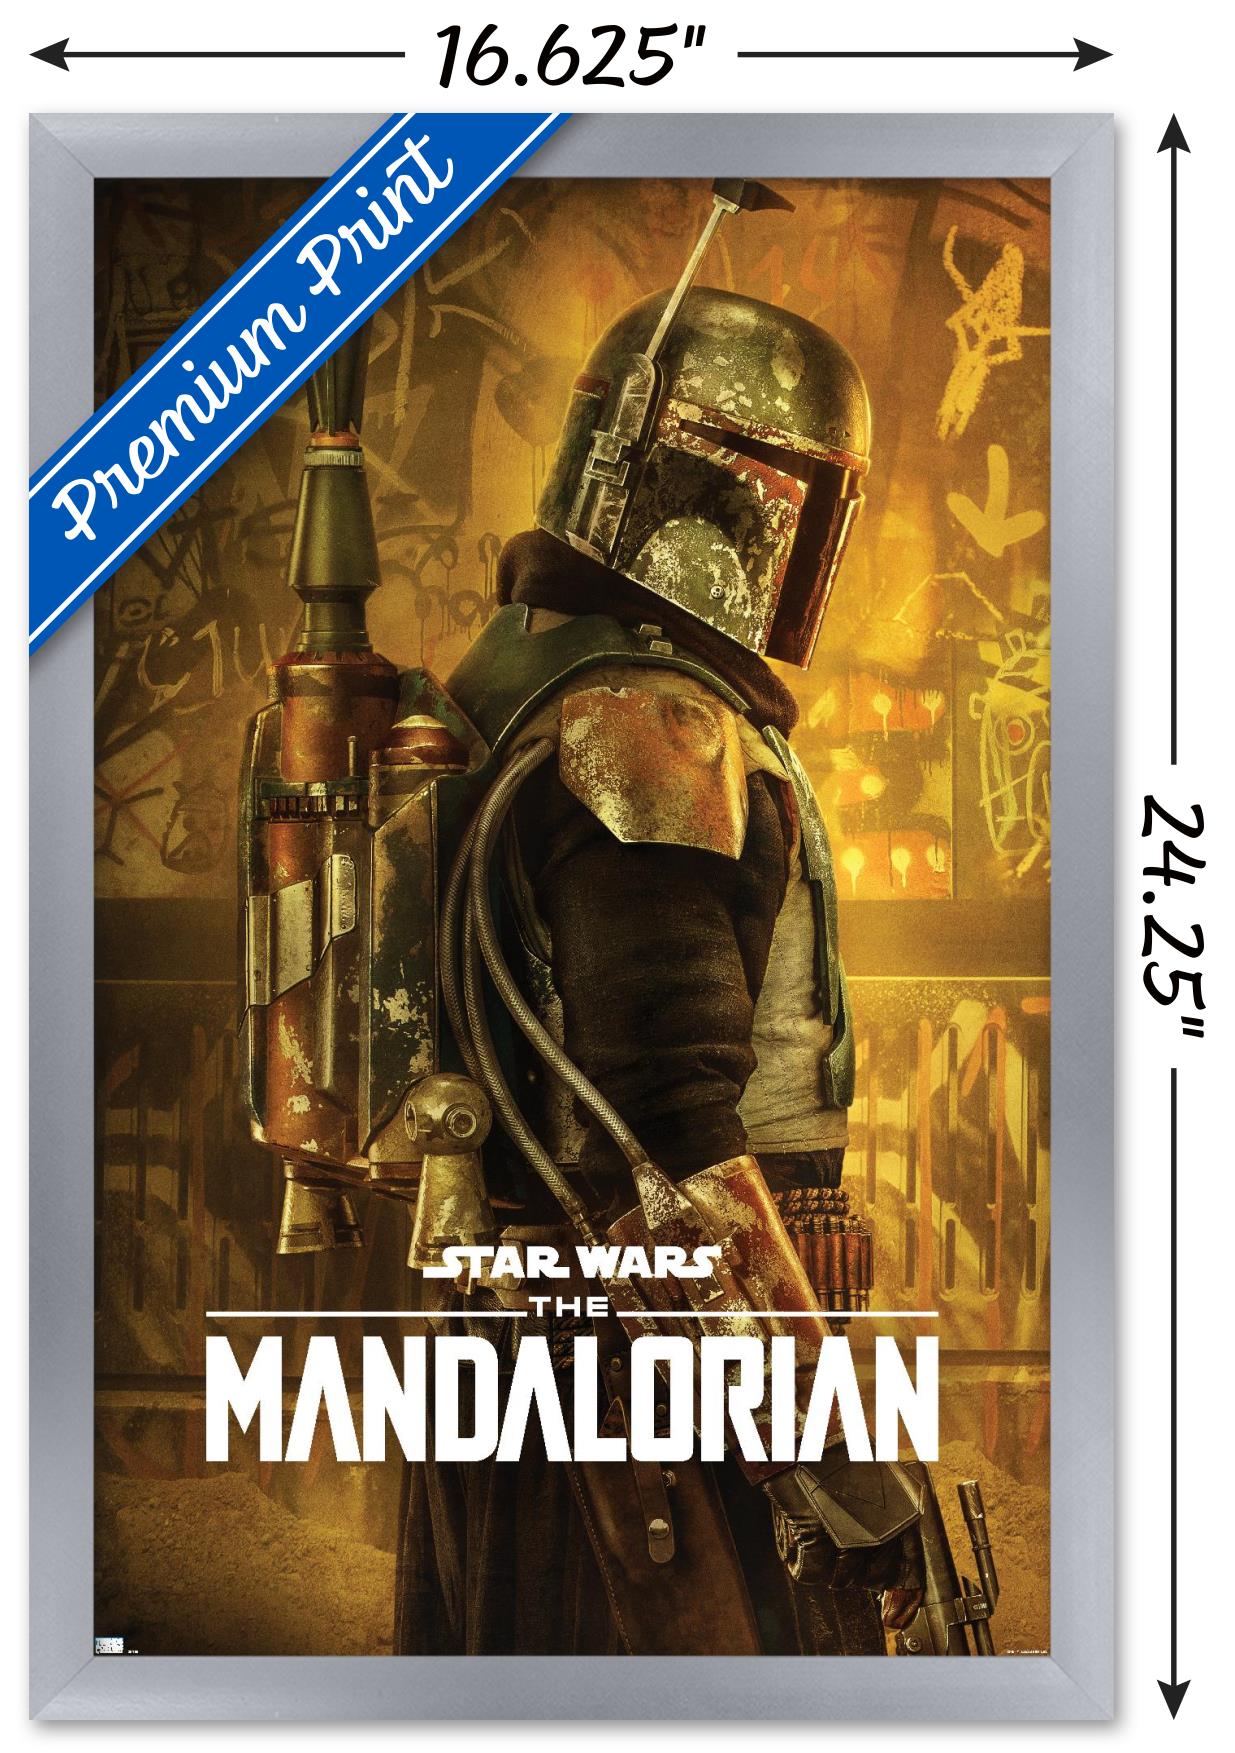 Star Wars: The Mandalorian Season 2 - Boba Fett One Sheet Wall Poster, 14.725" x 22.375", Framed - image 3 of 5